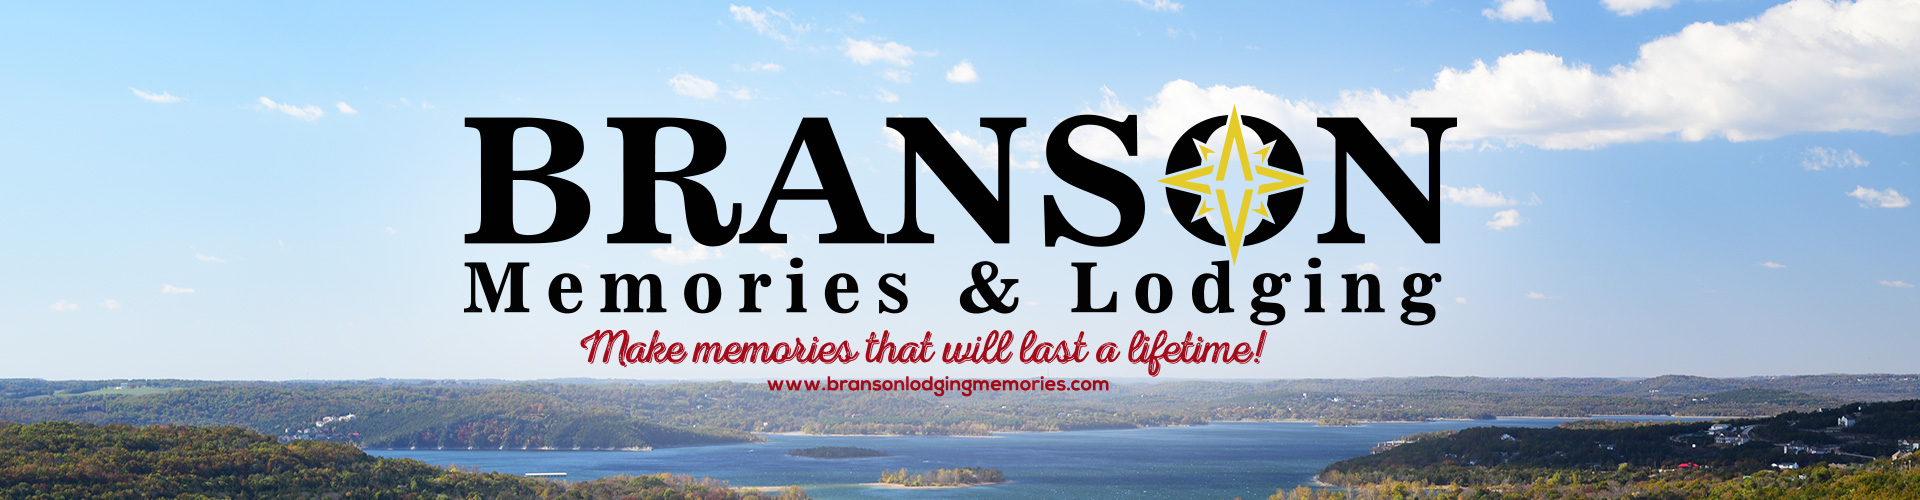 Branson Memories and Lodging Banner